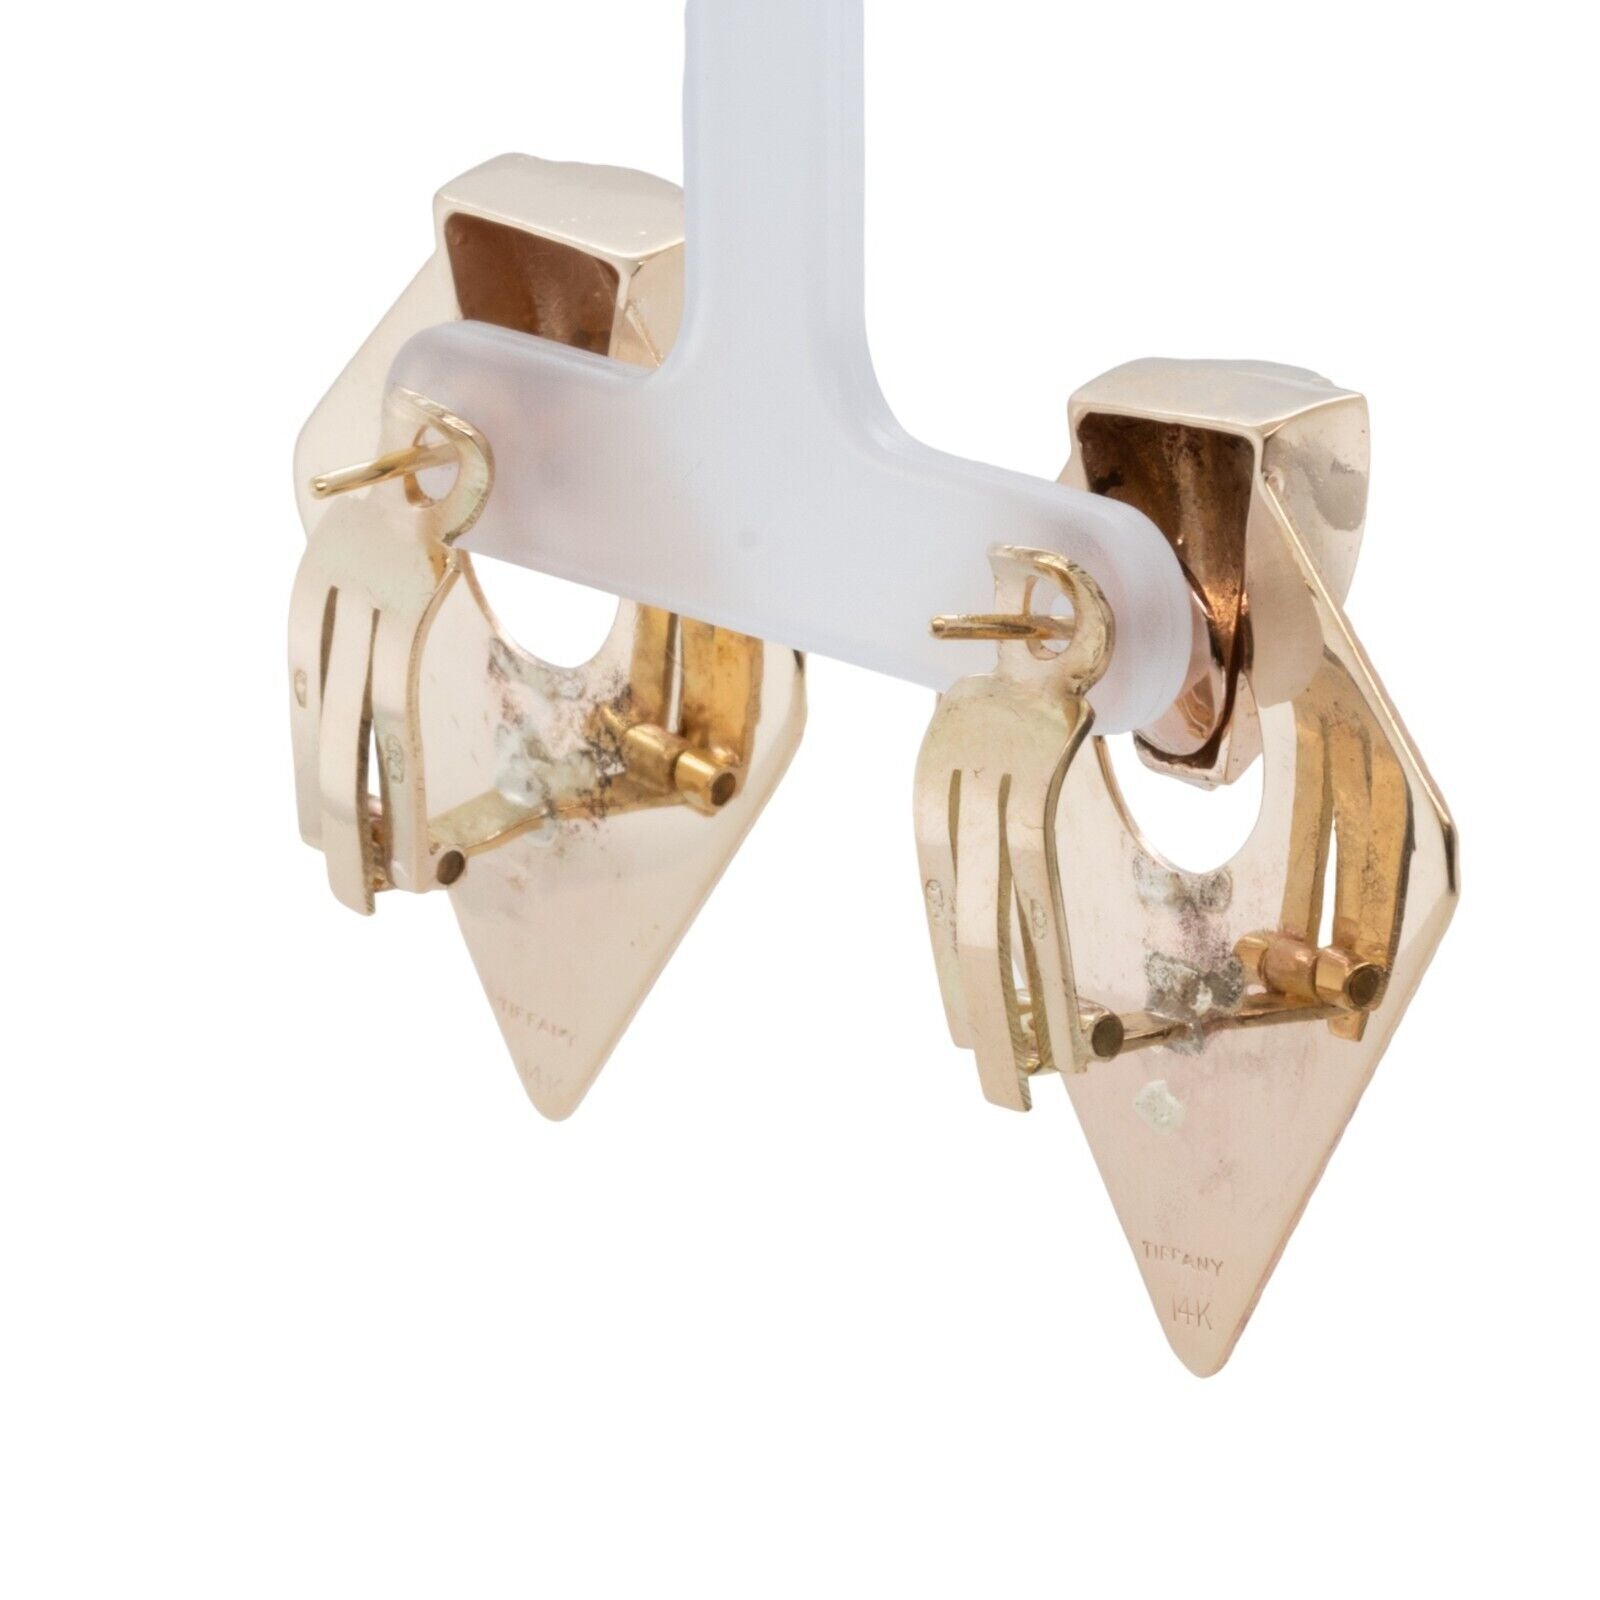 Tiffany & Co. 14k Yellow Gold Fanned Fluted Shield Omegaback Earrings VINTAGE